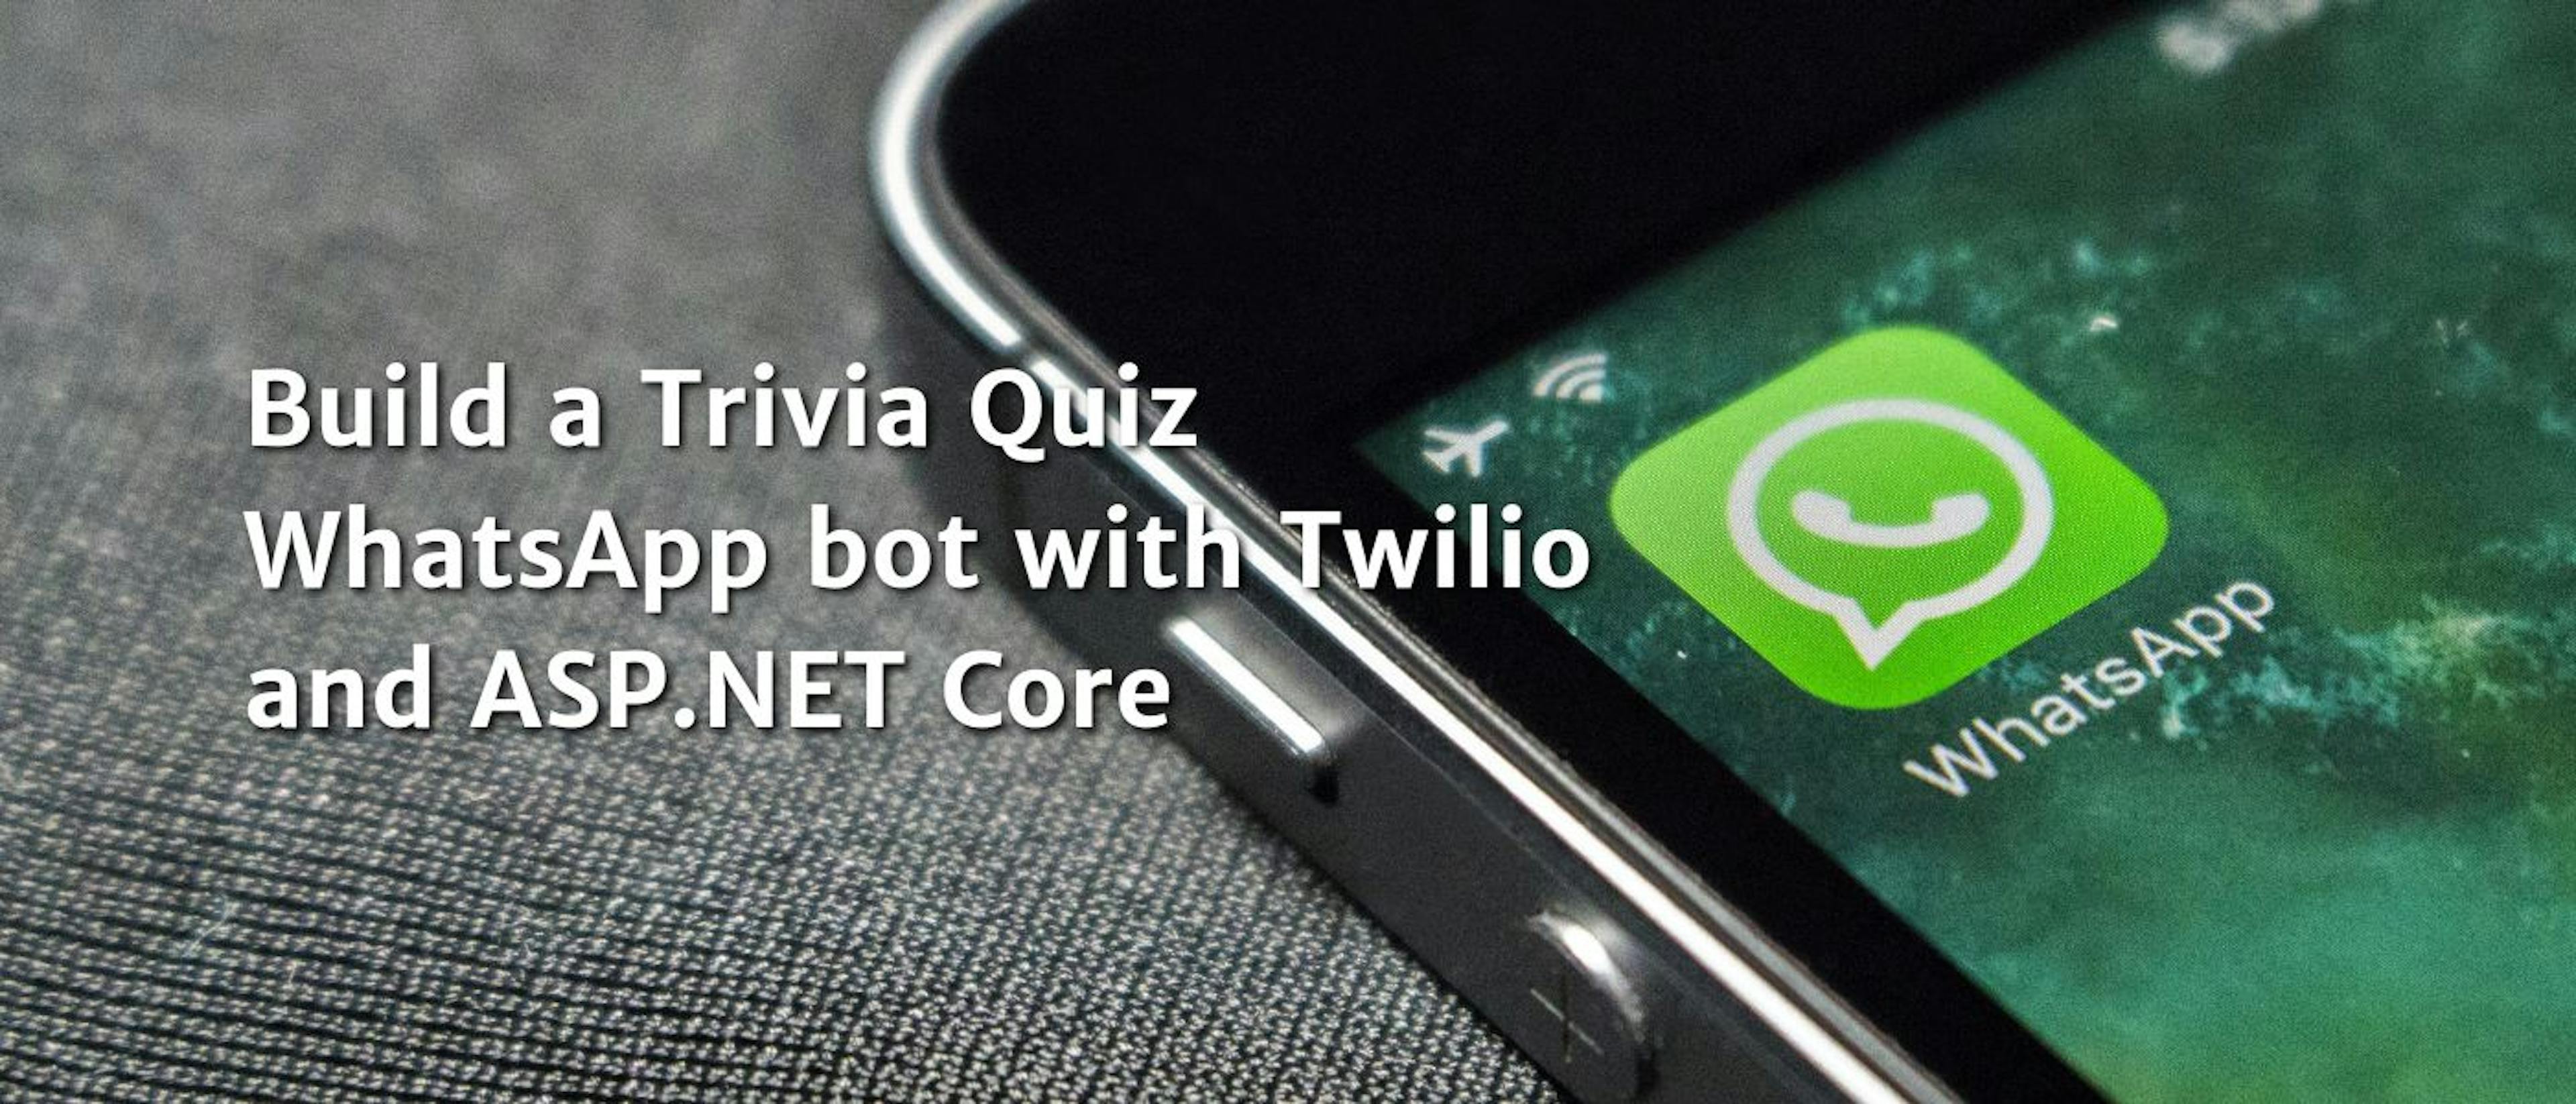 featured image - Twilio と ASP.NET Core を使用してトリビア クイズ WhatsApp ボットを構築する